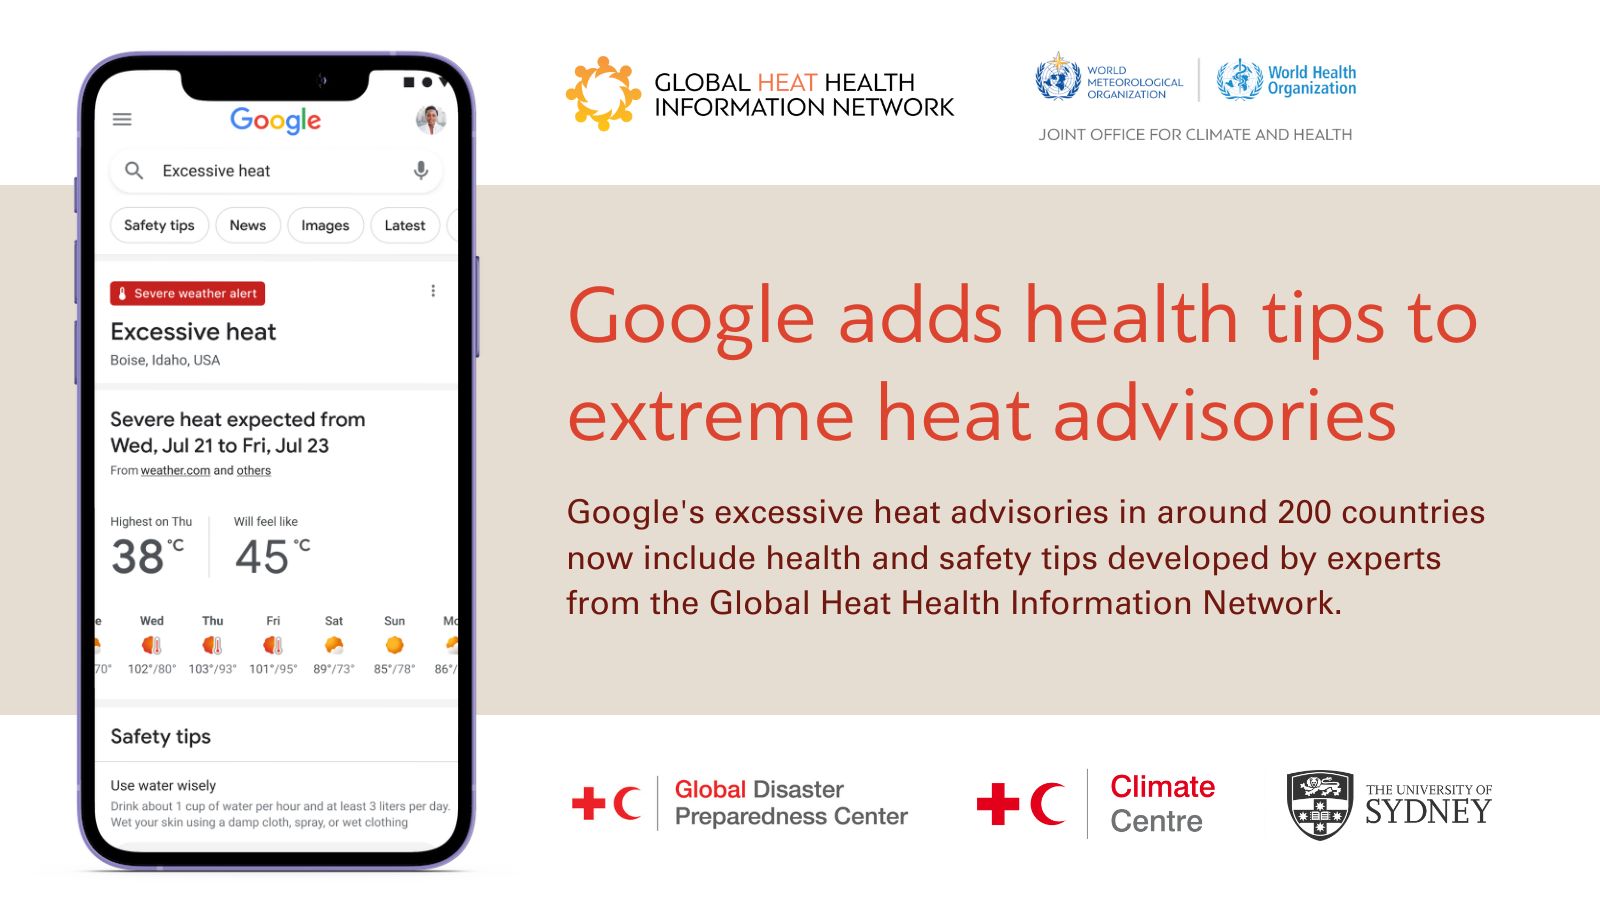 Google adds health tips to extreme heat advisories